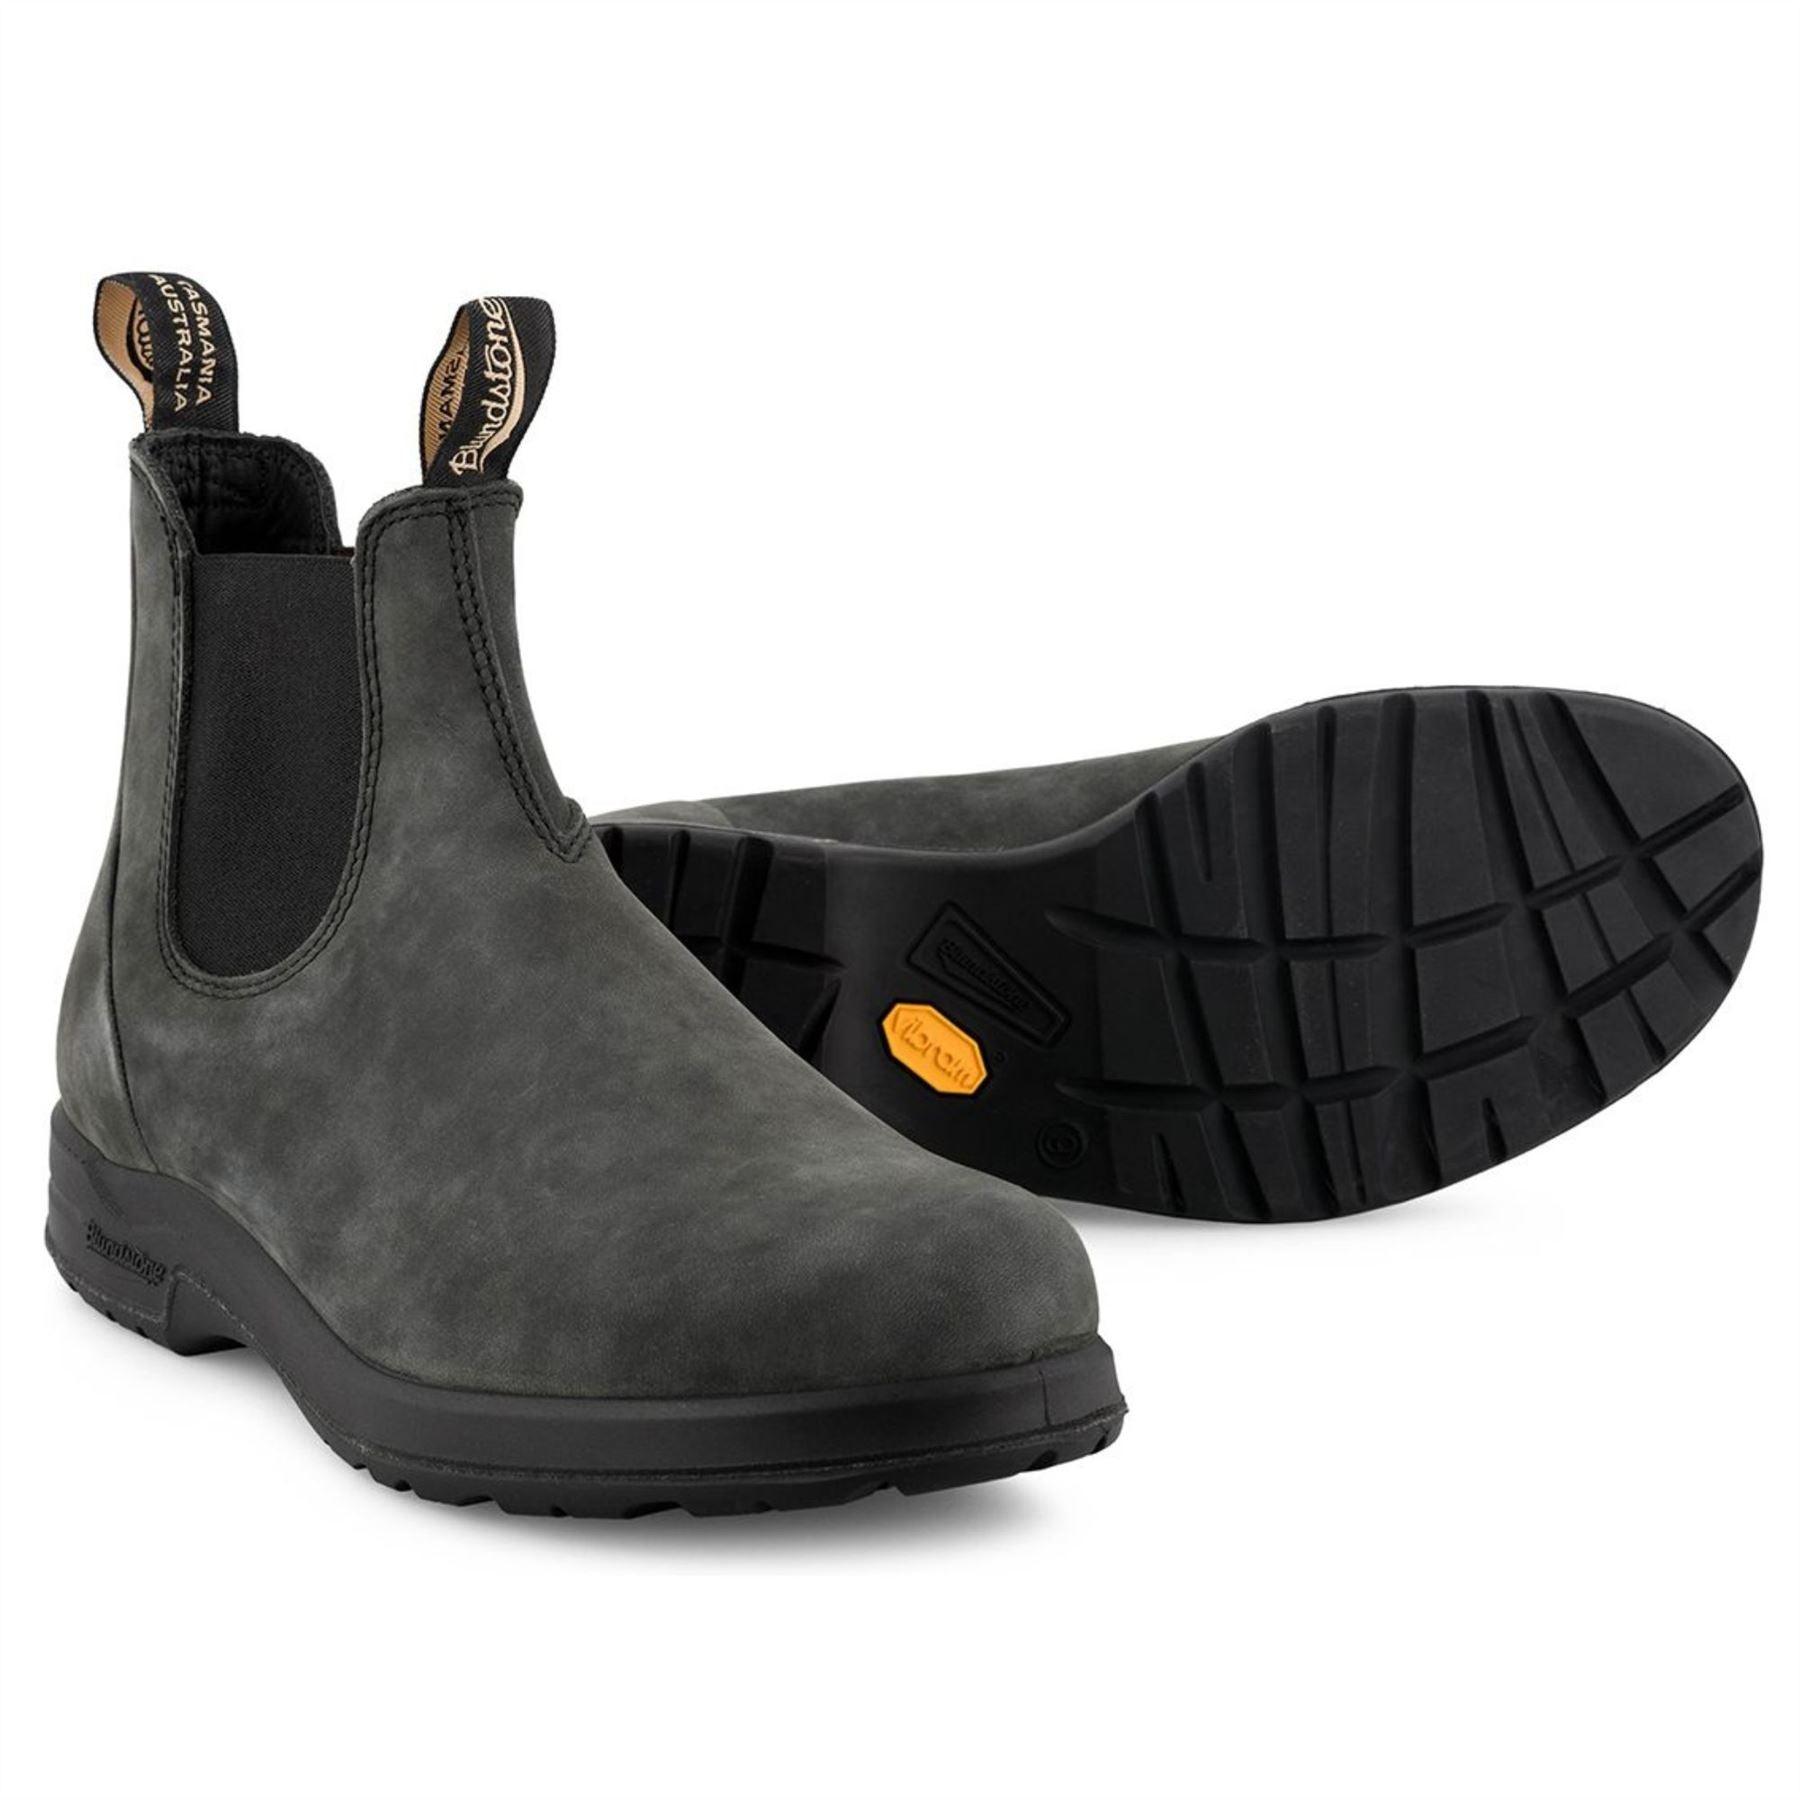 Blundstone 2055 Rustic Black Vintage Leather Chelsea Terrain Boots Slip On Retro - Knighthood Store